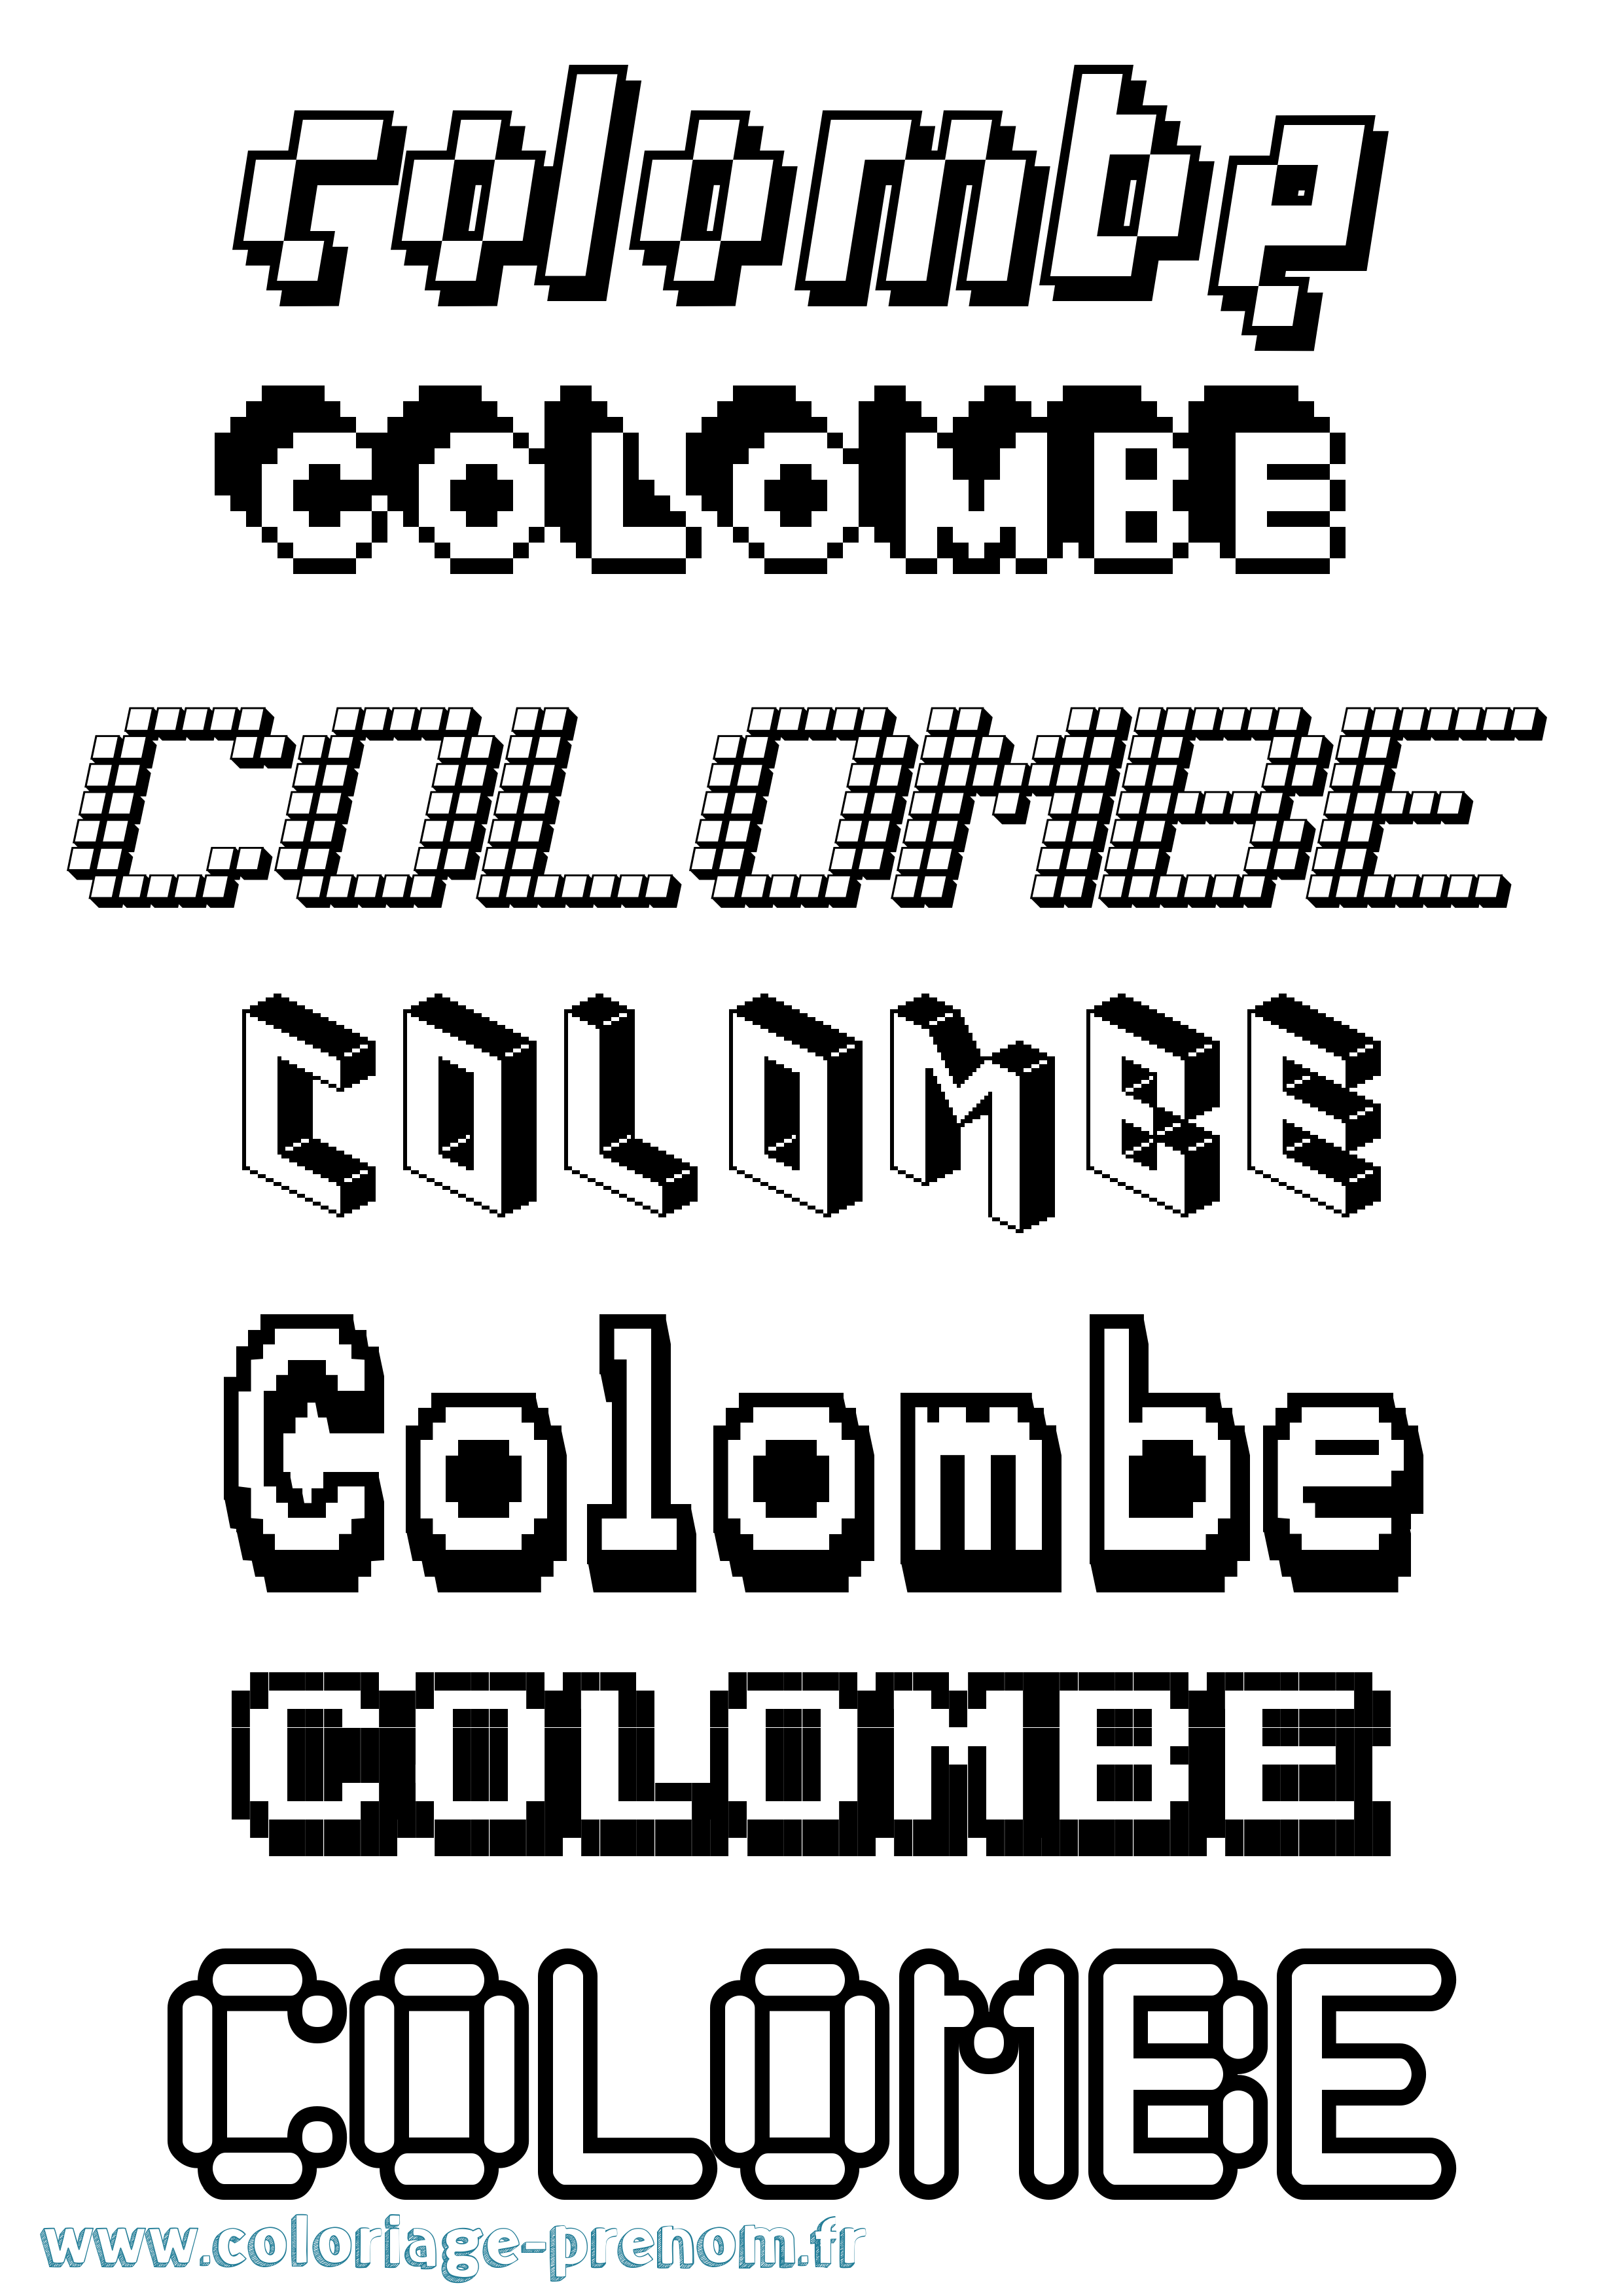 Coloriage prénom Colombe Pixel